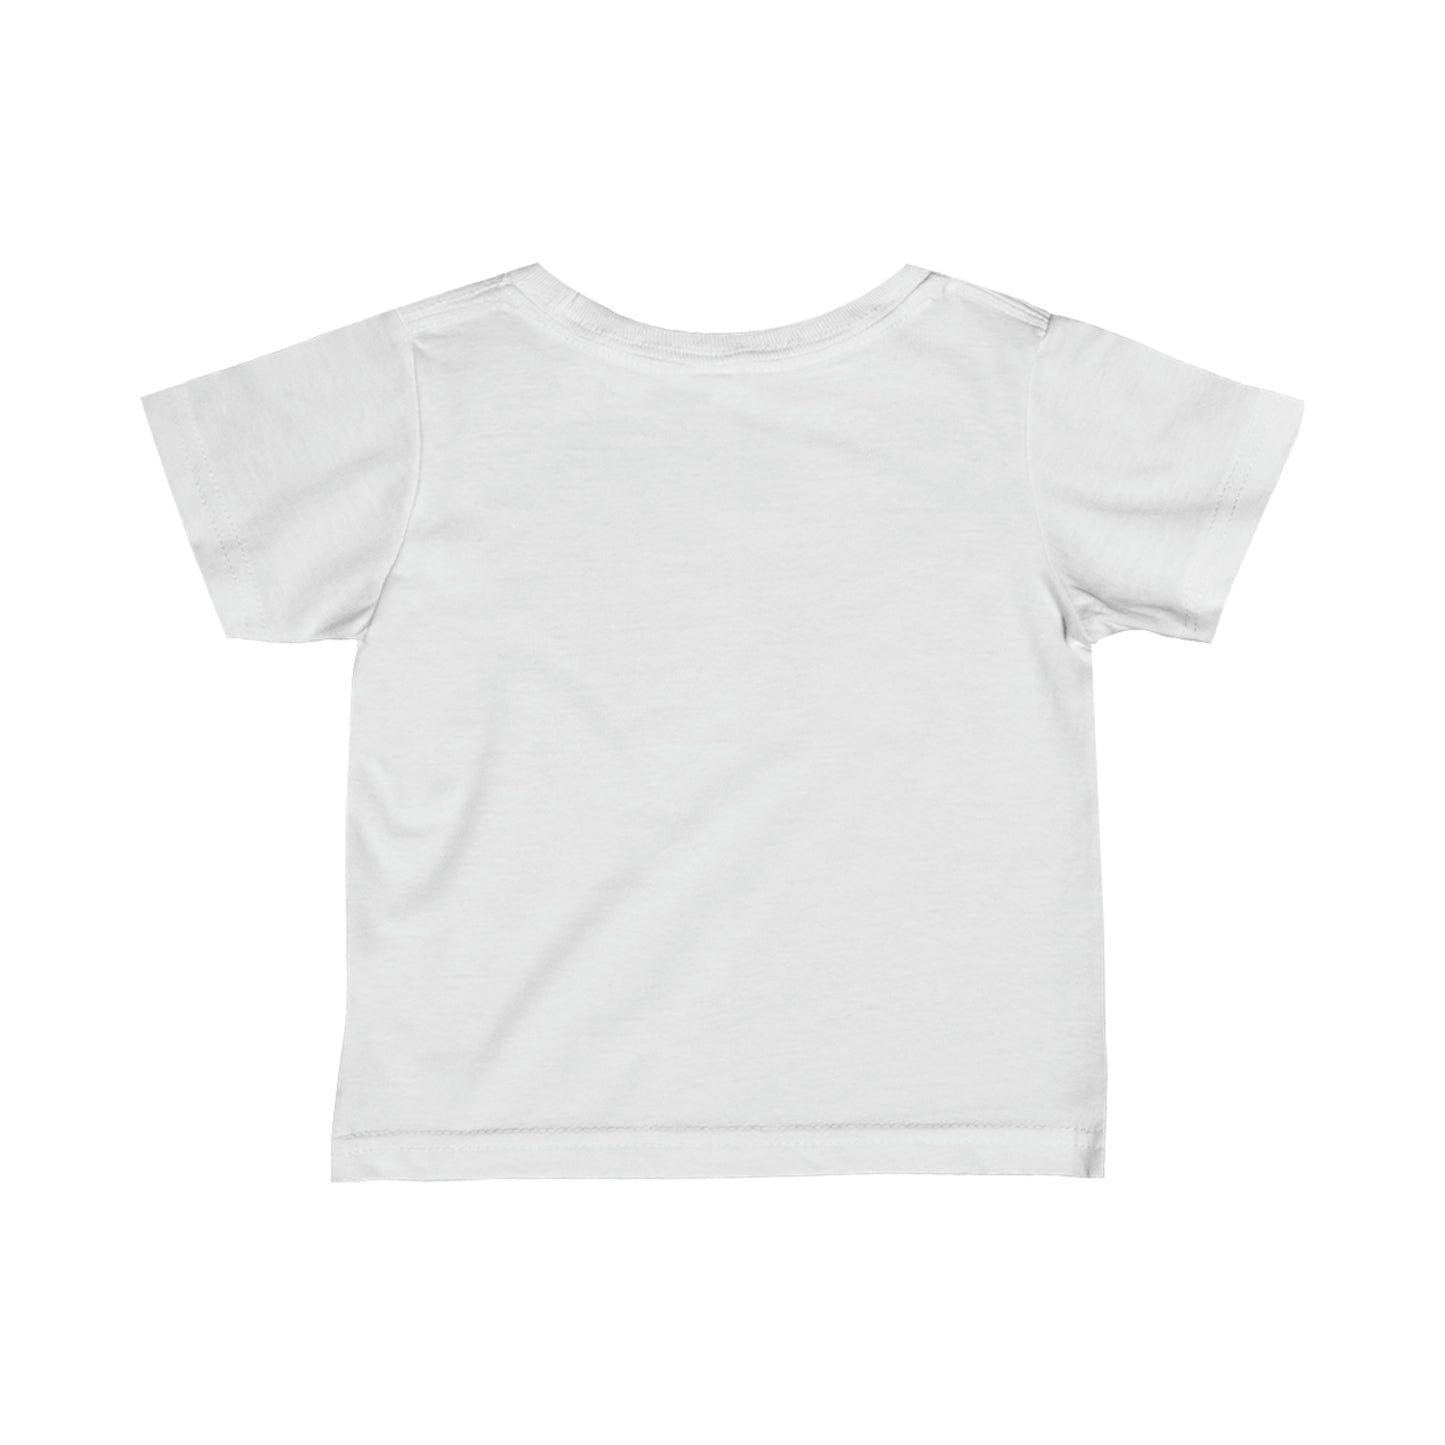 HAPPY unisex print short-sleeved t-shirt for 6m-24m